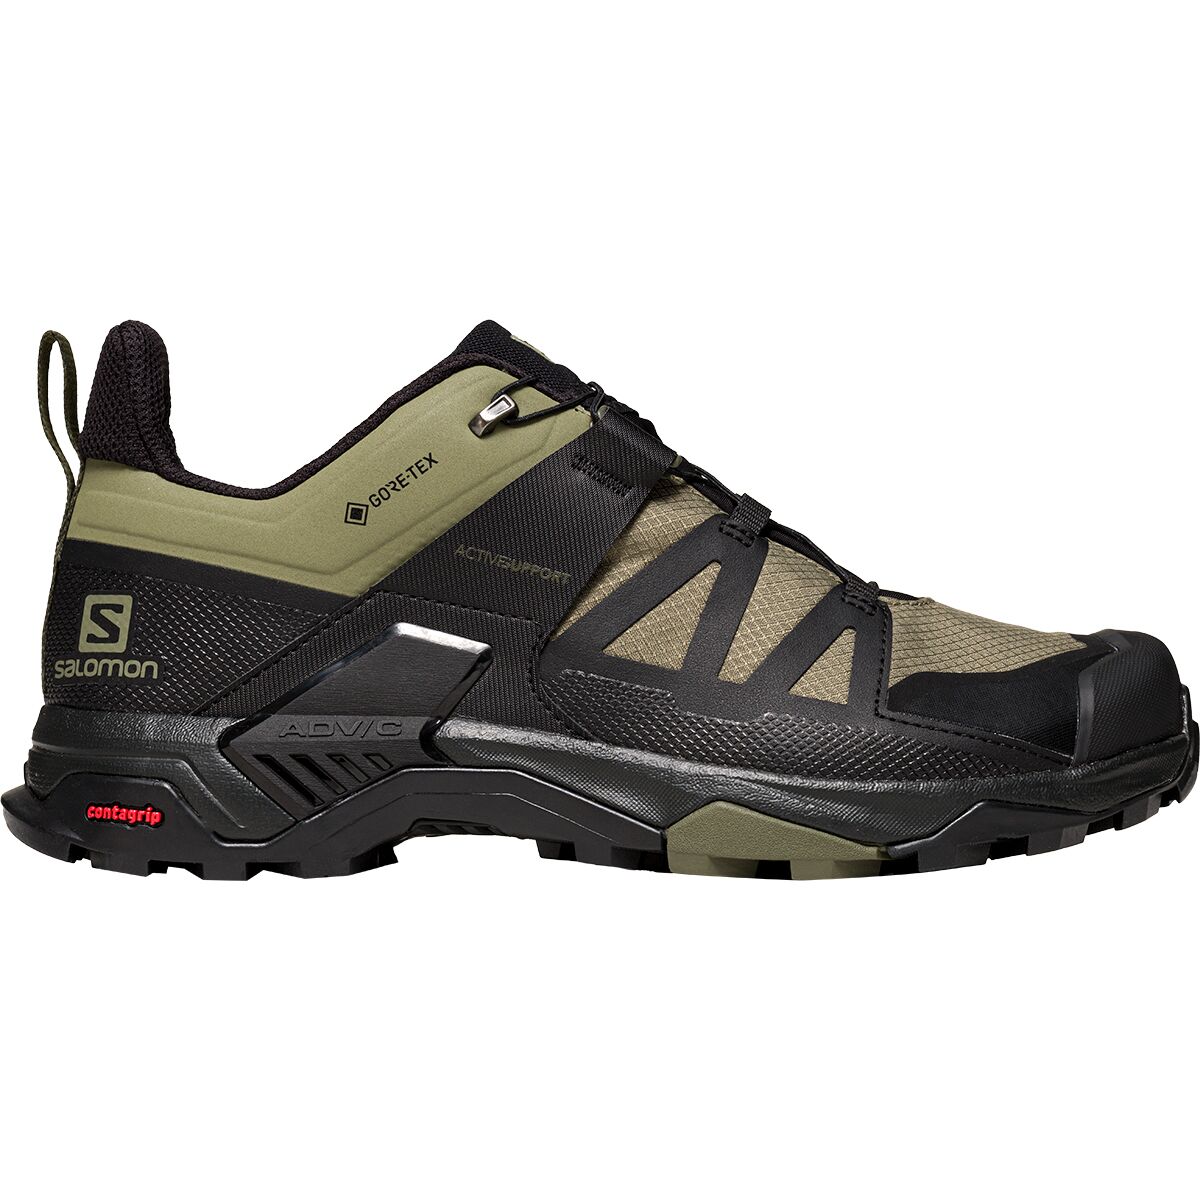 Salomon X Ultra 4 GTX Wide Hiking Shoe - Men's